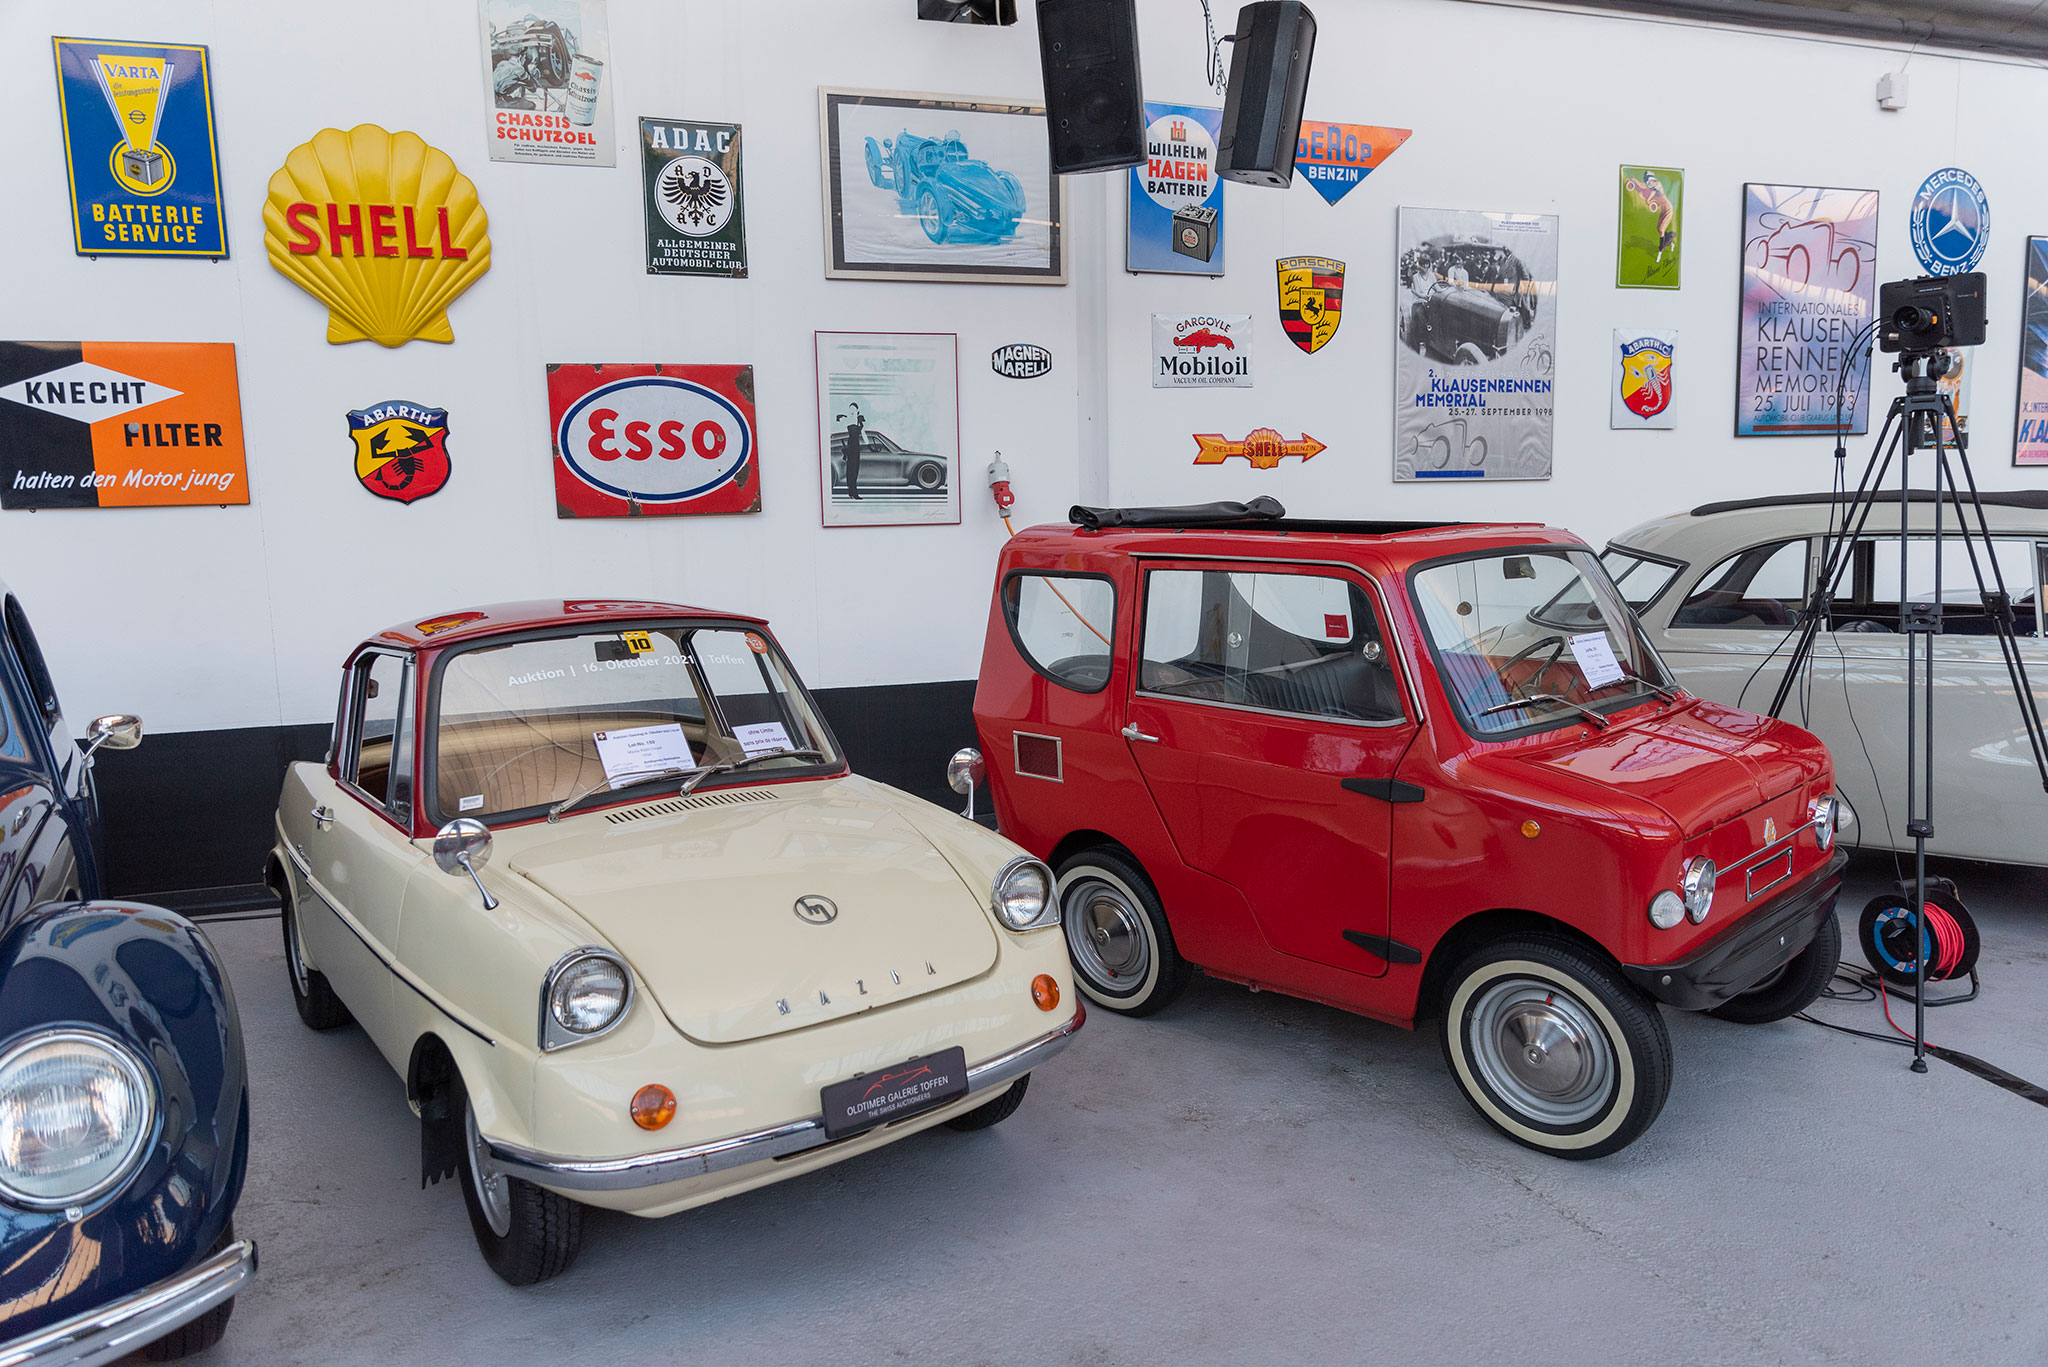 1964 Mazda R360 CHF 33'600 - 1975 Fiat Baldi CHF 13'440 - Oldtimer Galerie Toffen octobre 2021